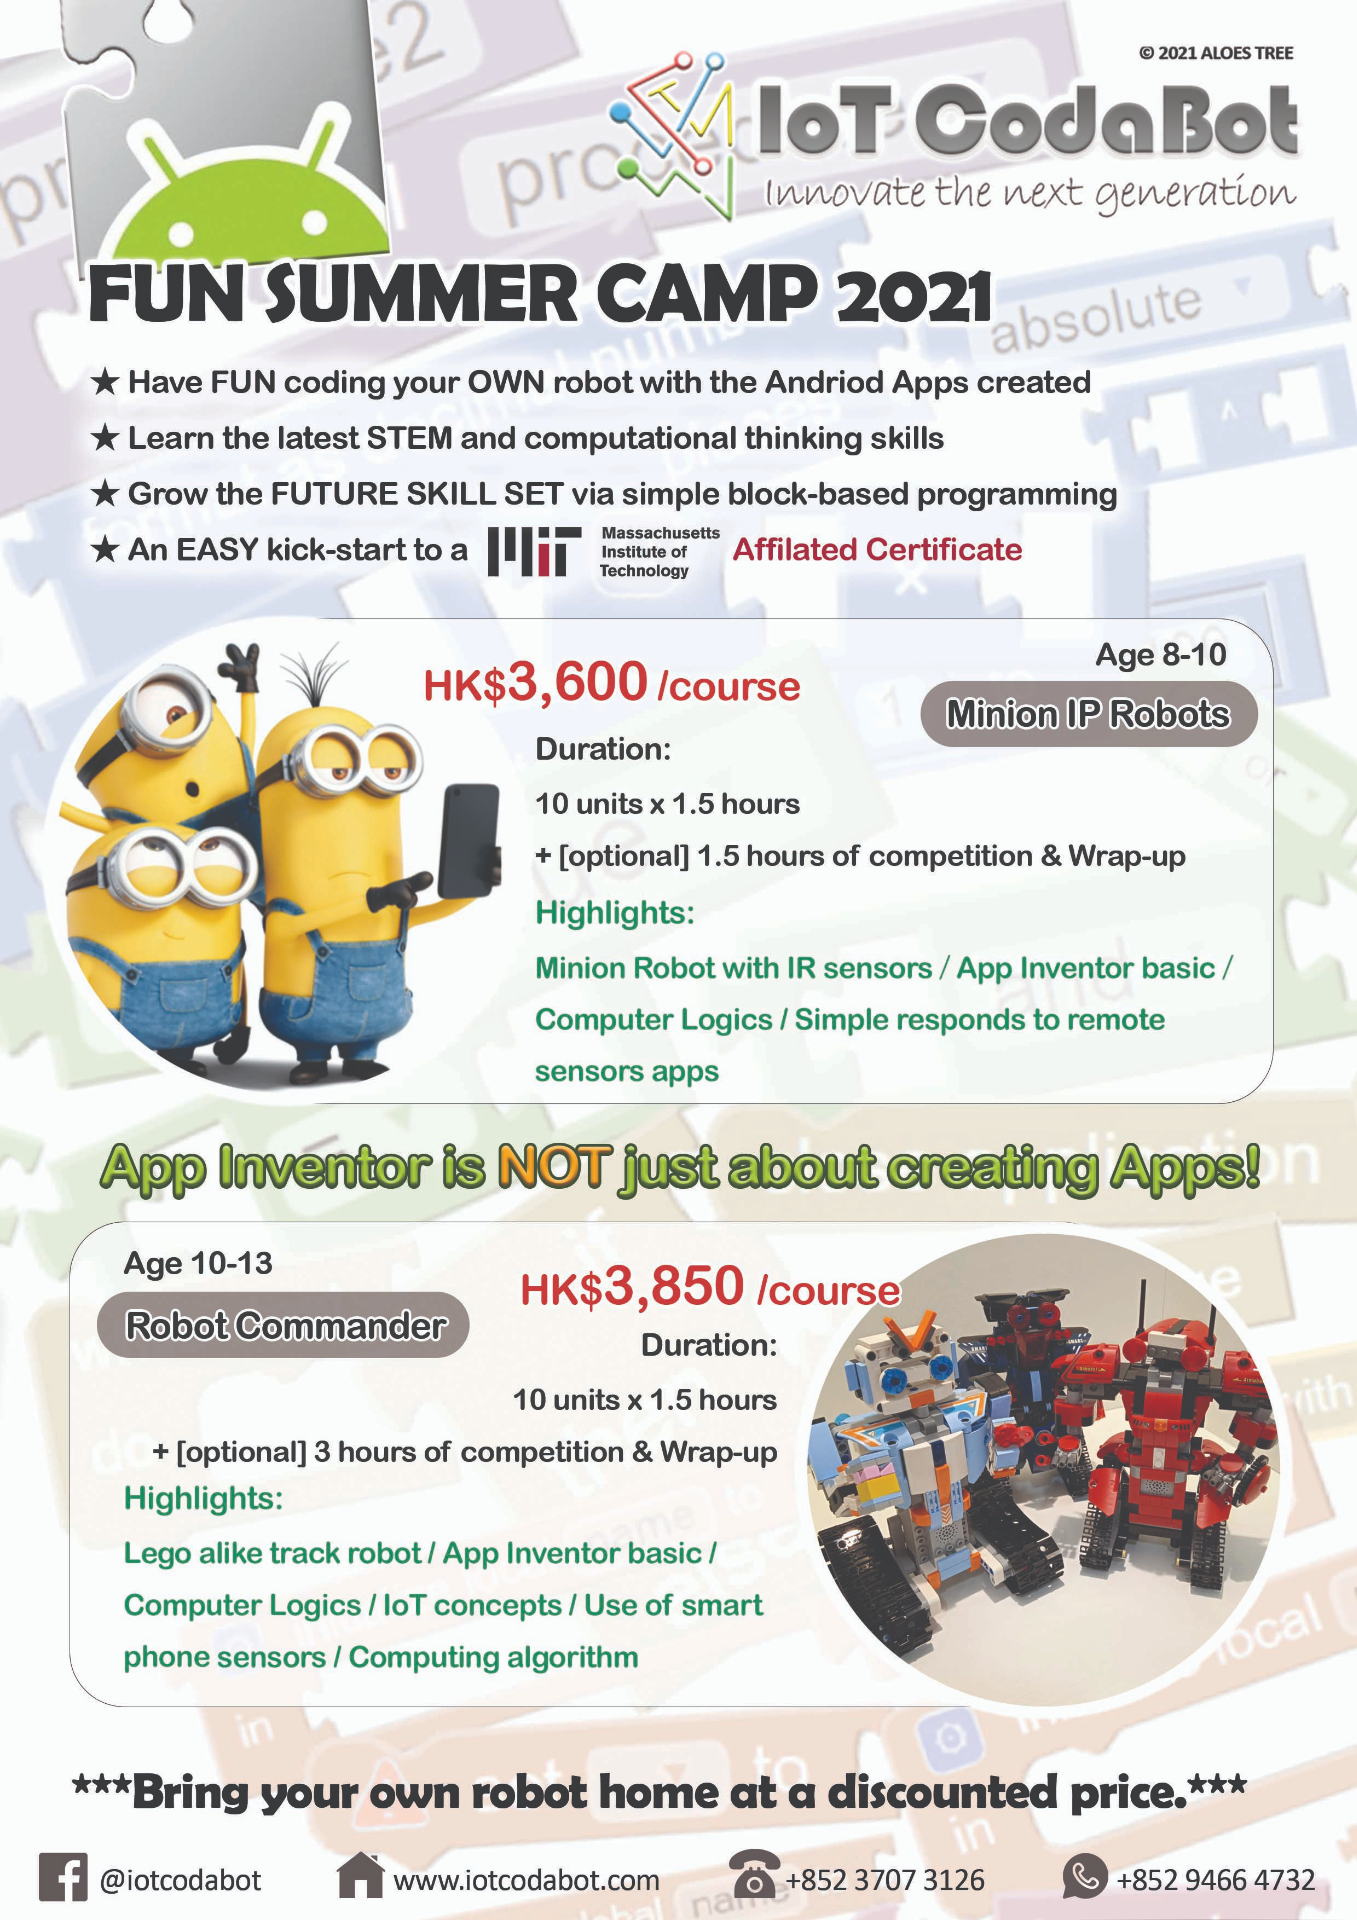 IoT Codabot FUN Summer Camp 2021 